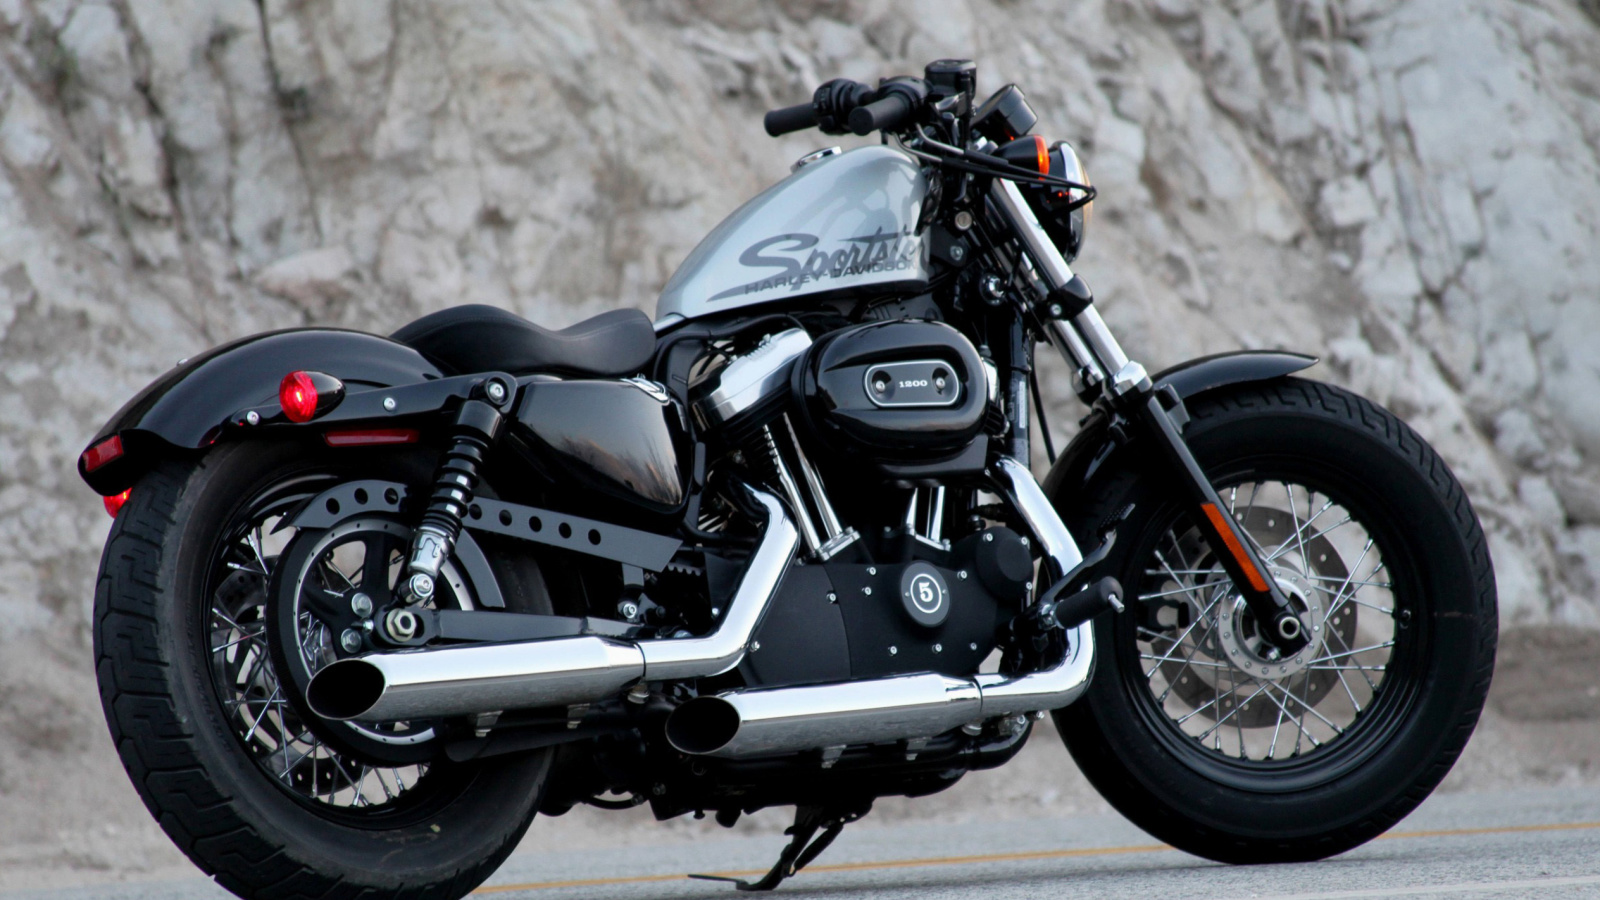 Fondo de pantalla Harley Davidson Sportster 1200 1600x900